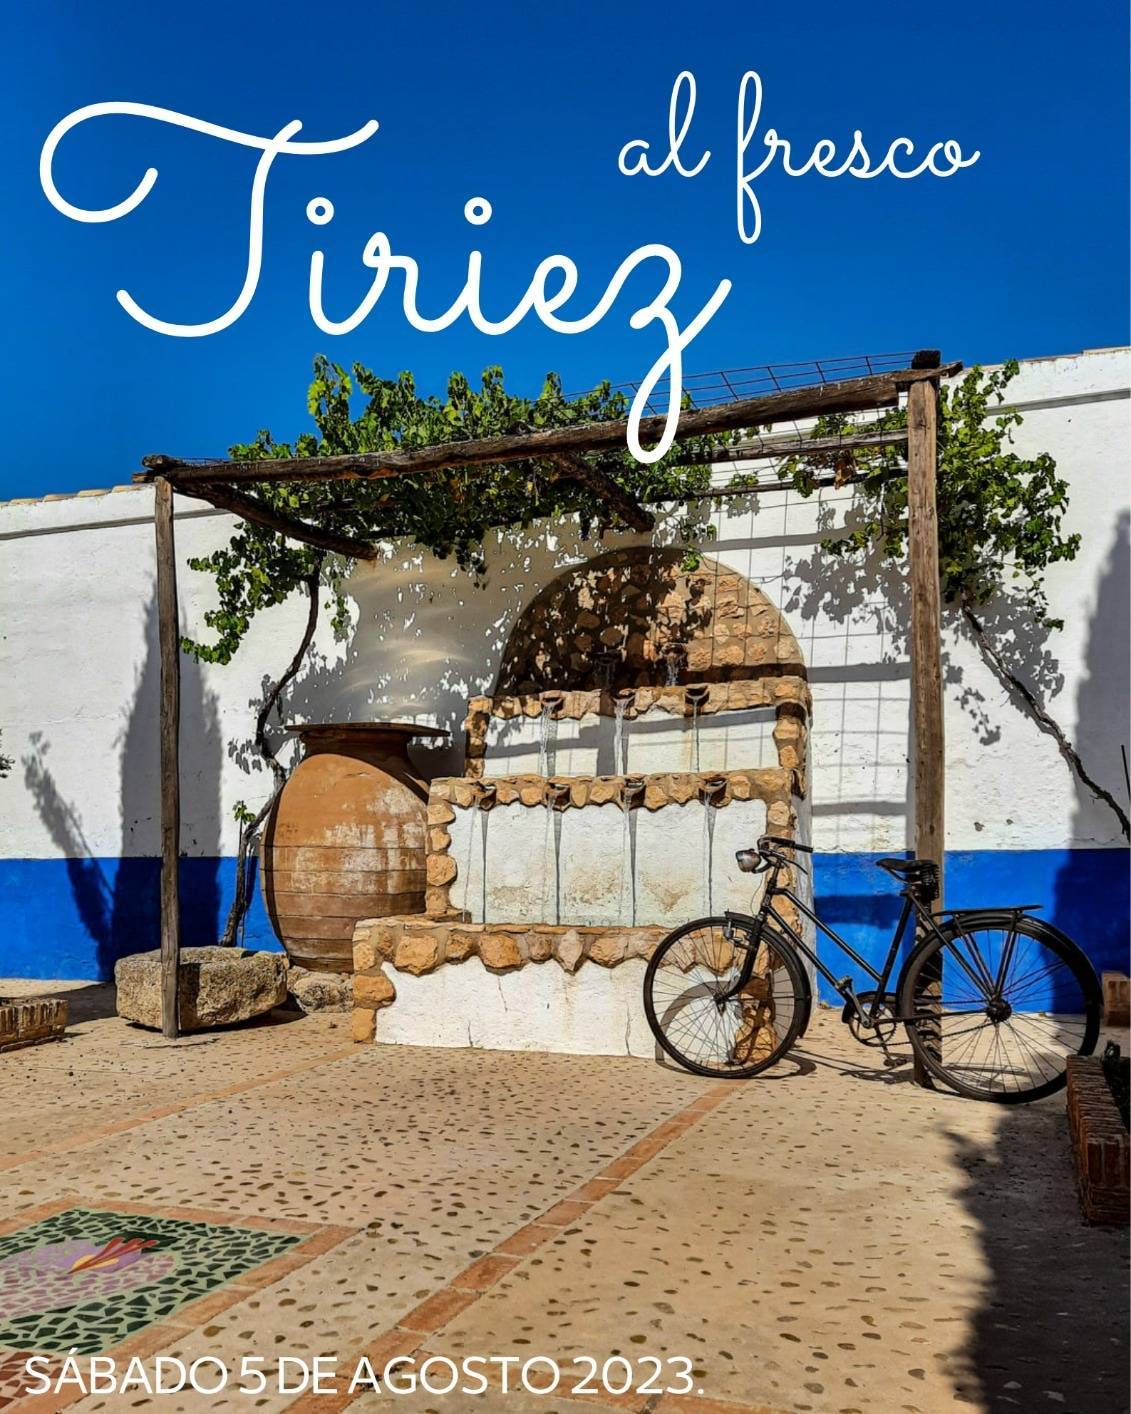 VII Tiriez al Fresco - Tiriez (Albacete)